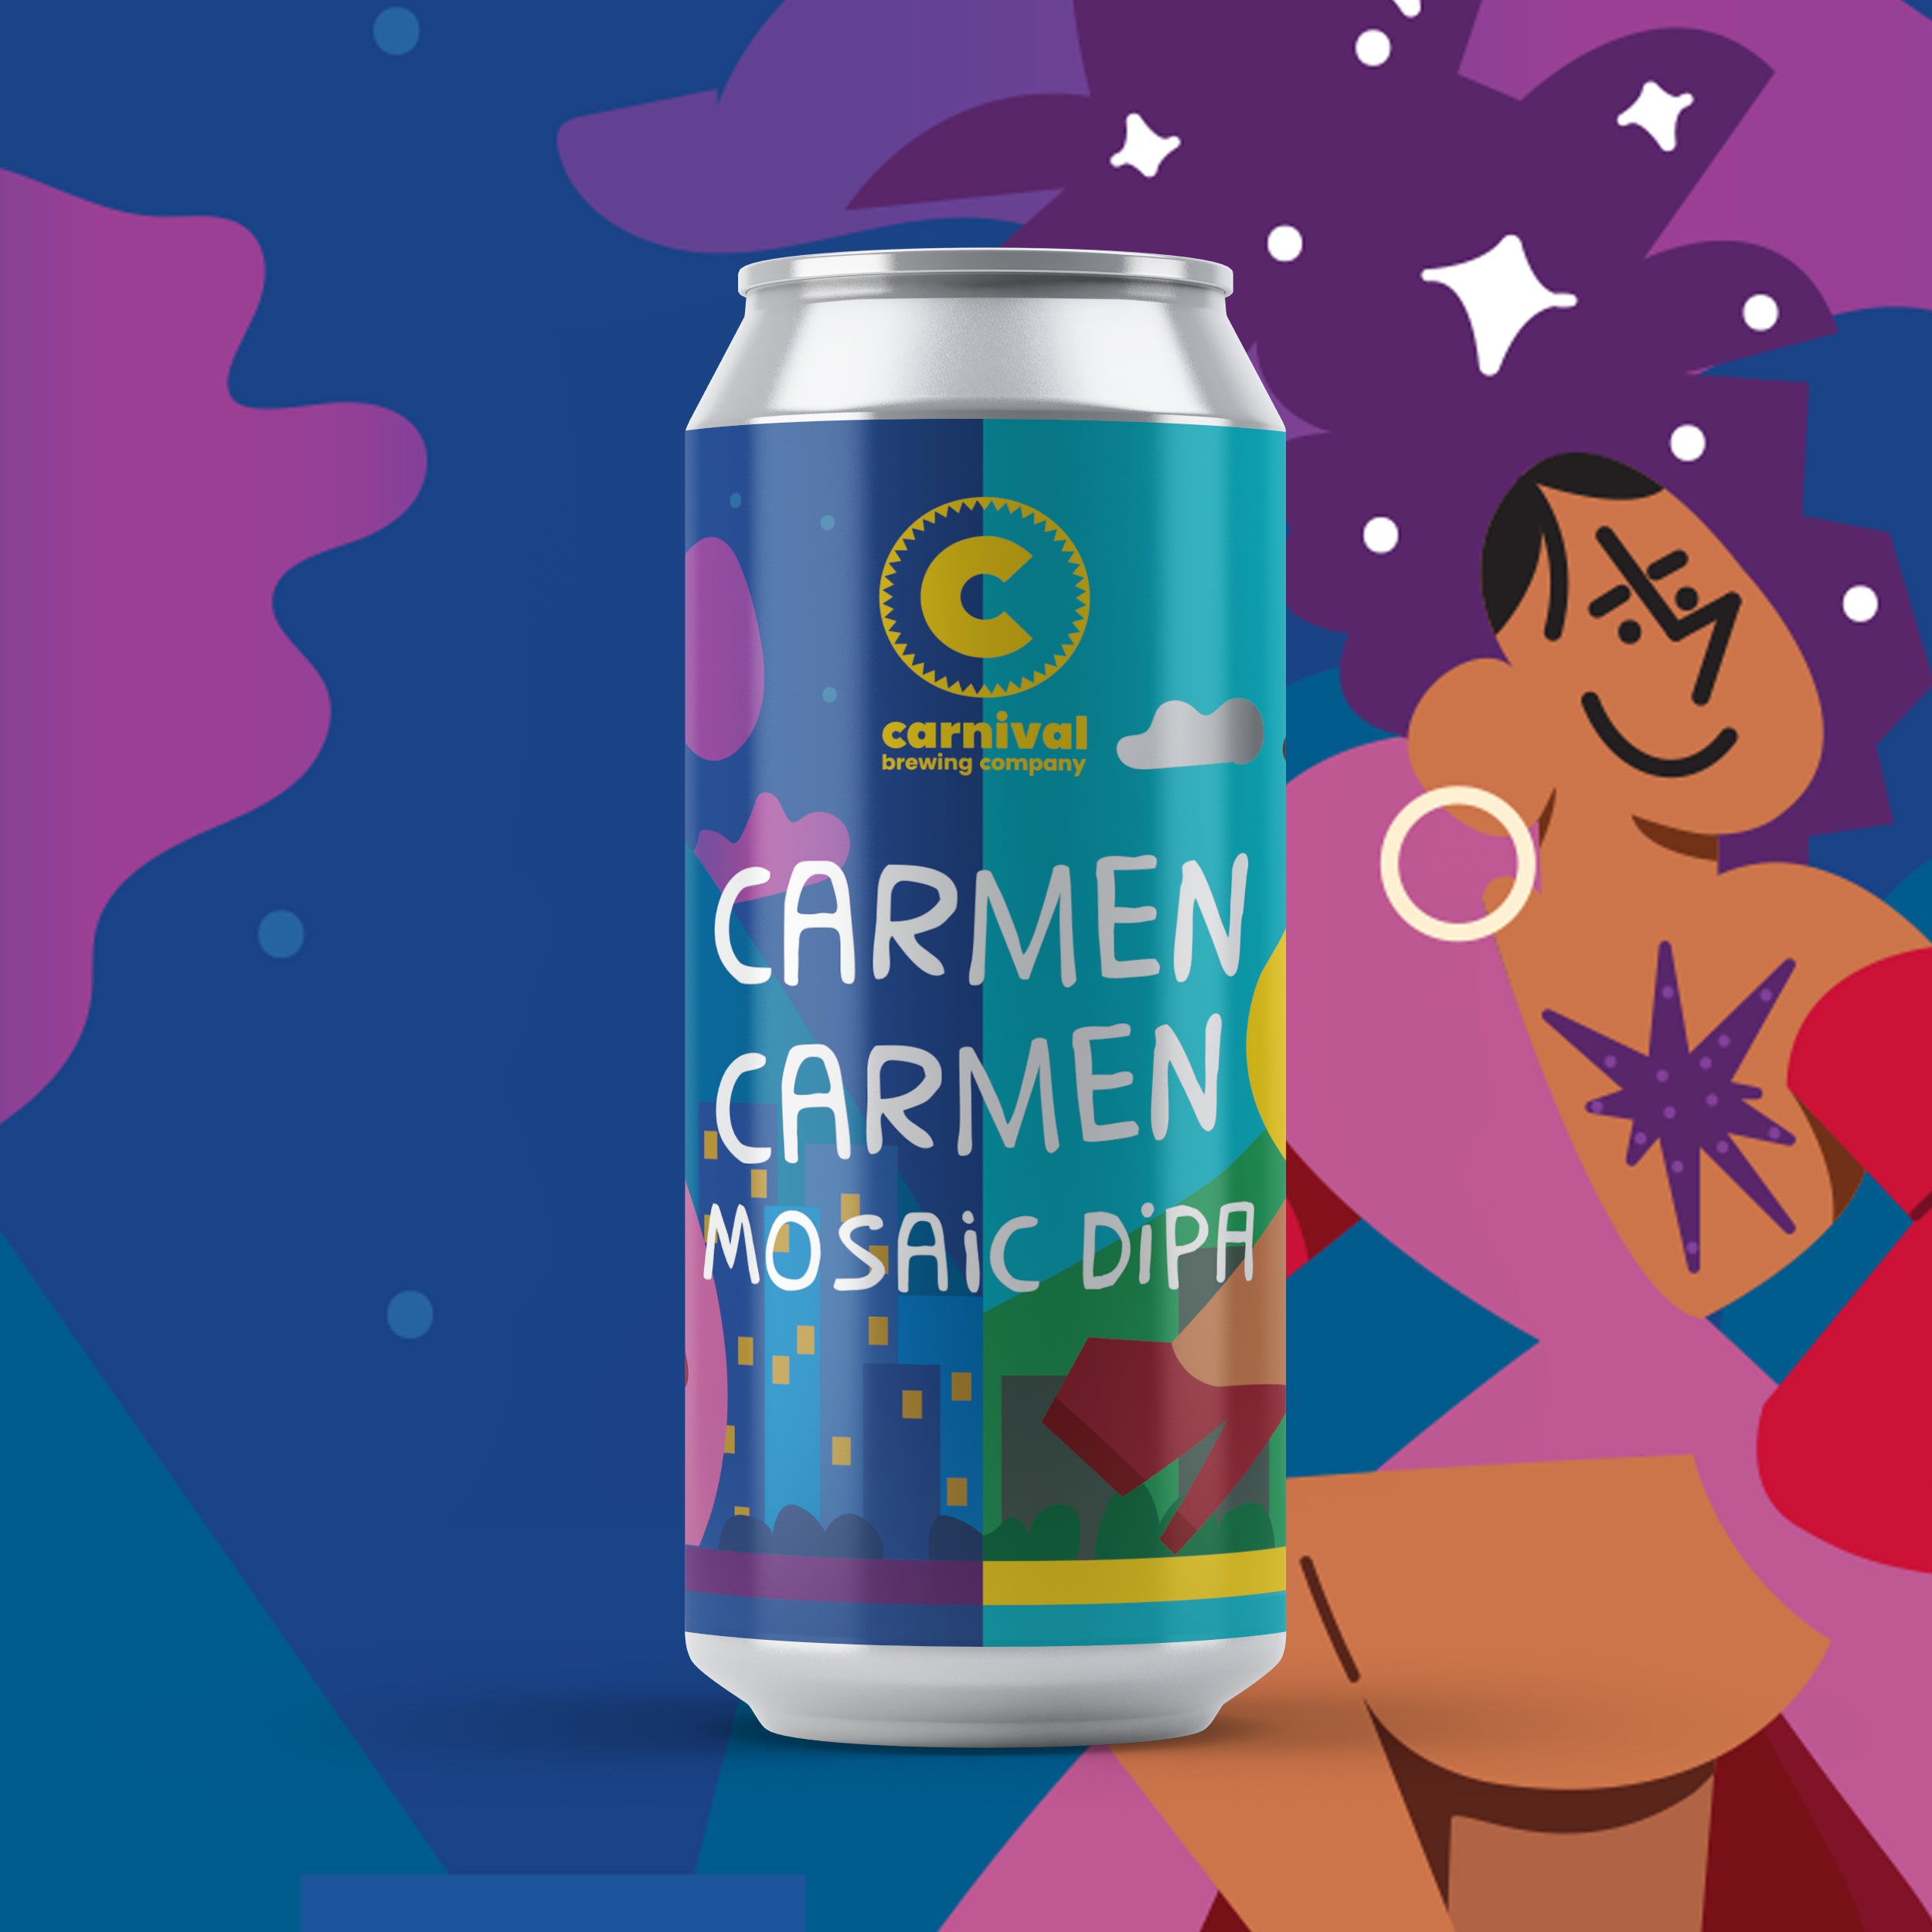 Carmen Carmen Mosaic Double IPA (8%)